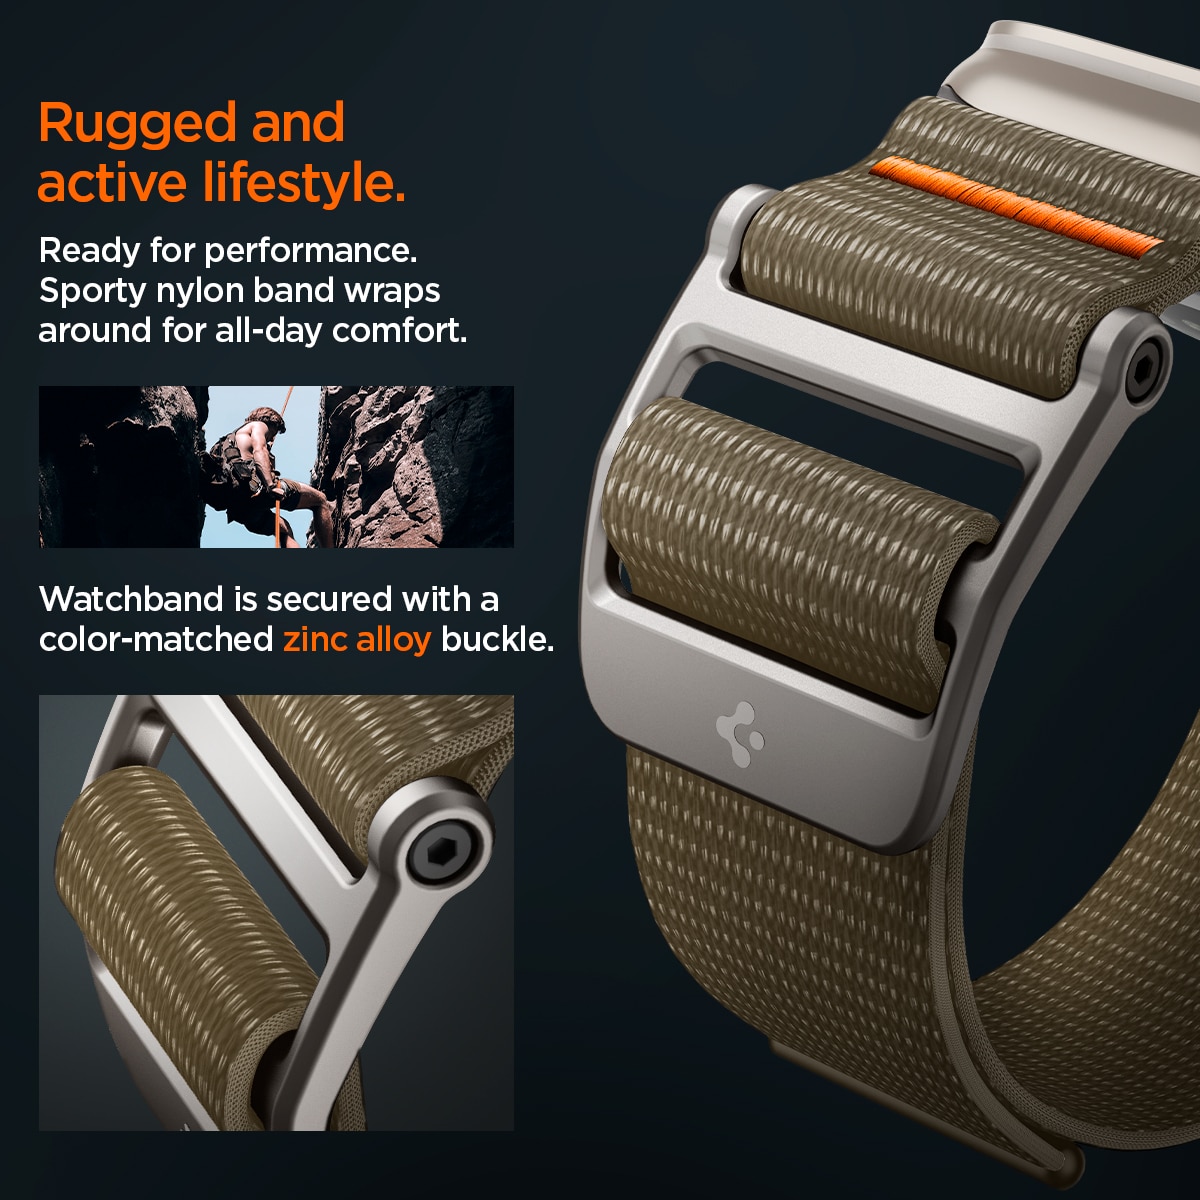 Apple Watch 42mm DuraPro Flex Ultra Khaki